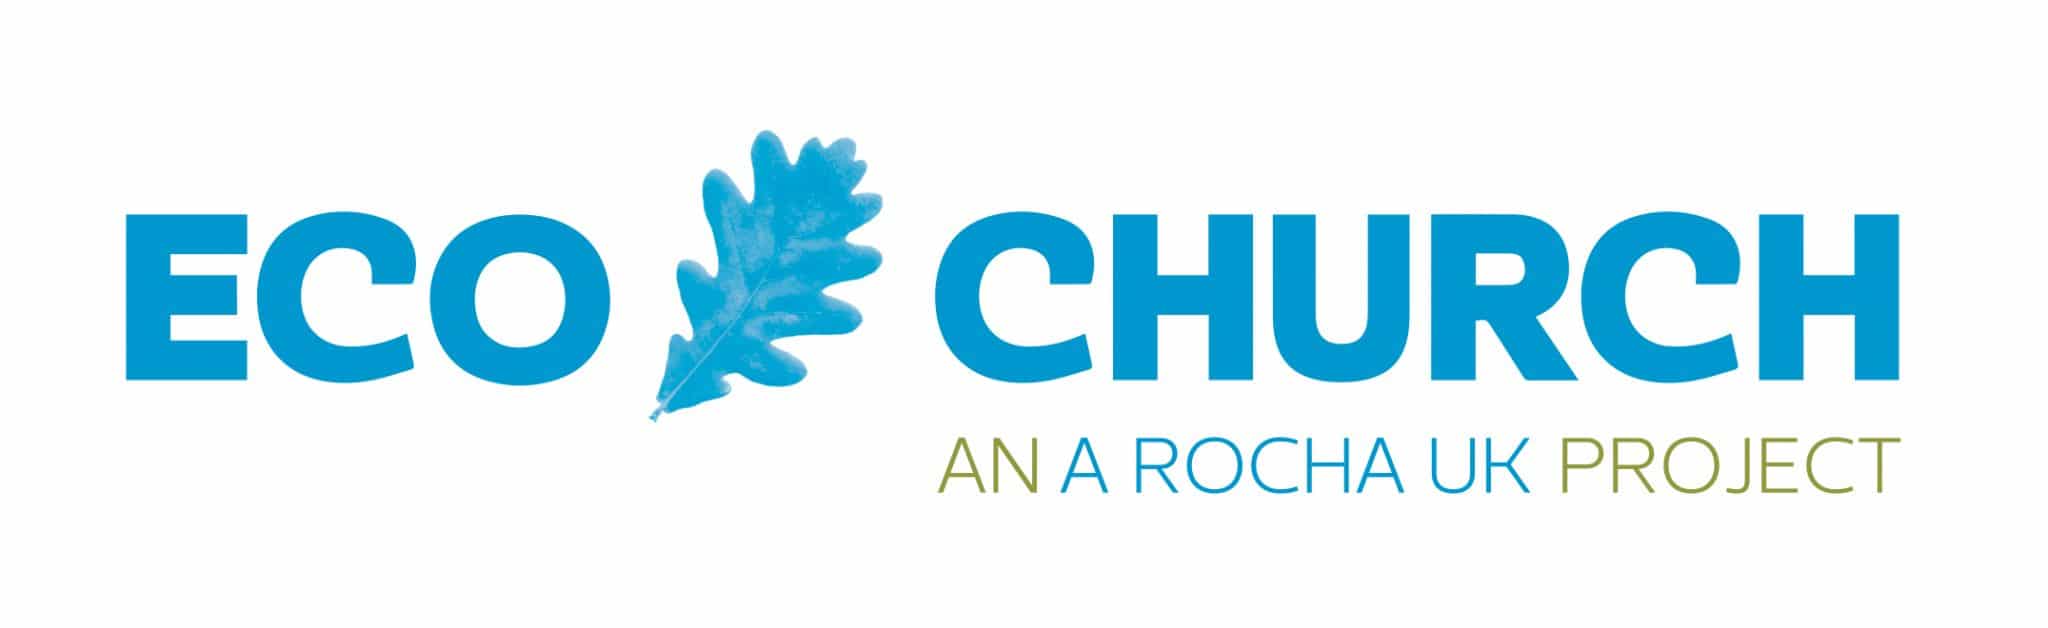 A Rocha ECO-CHURCH-logo